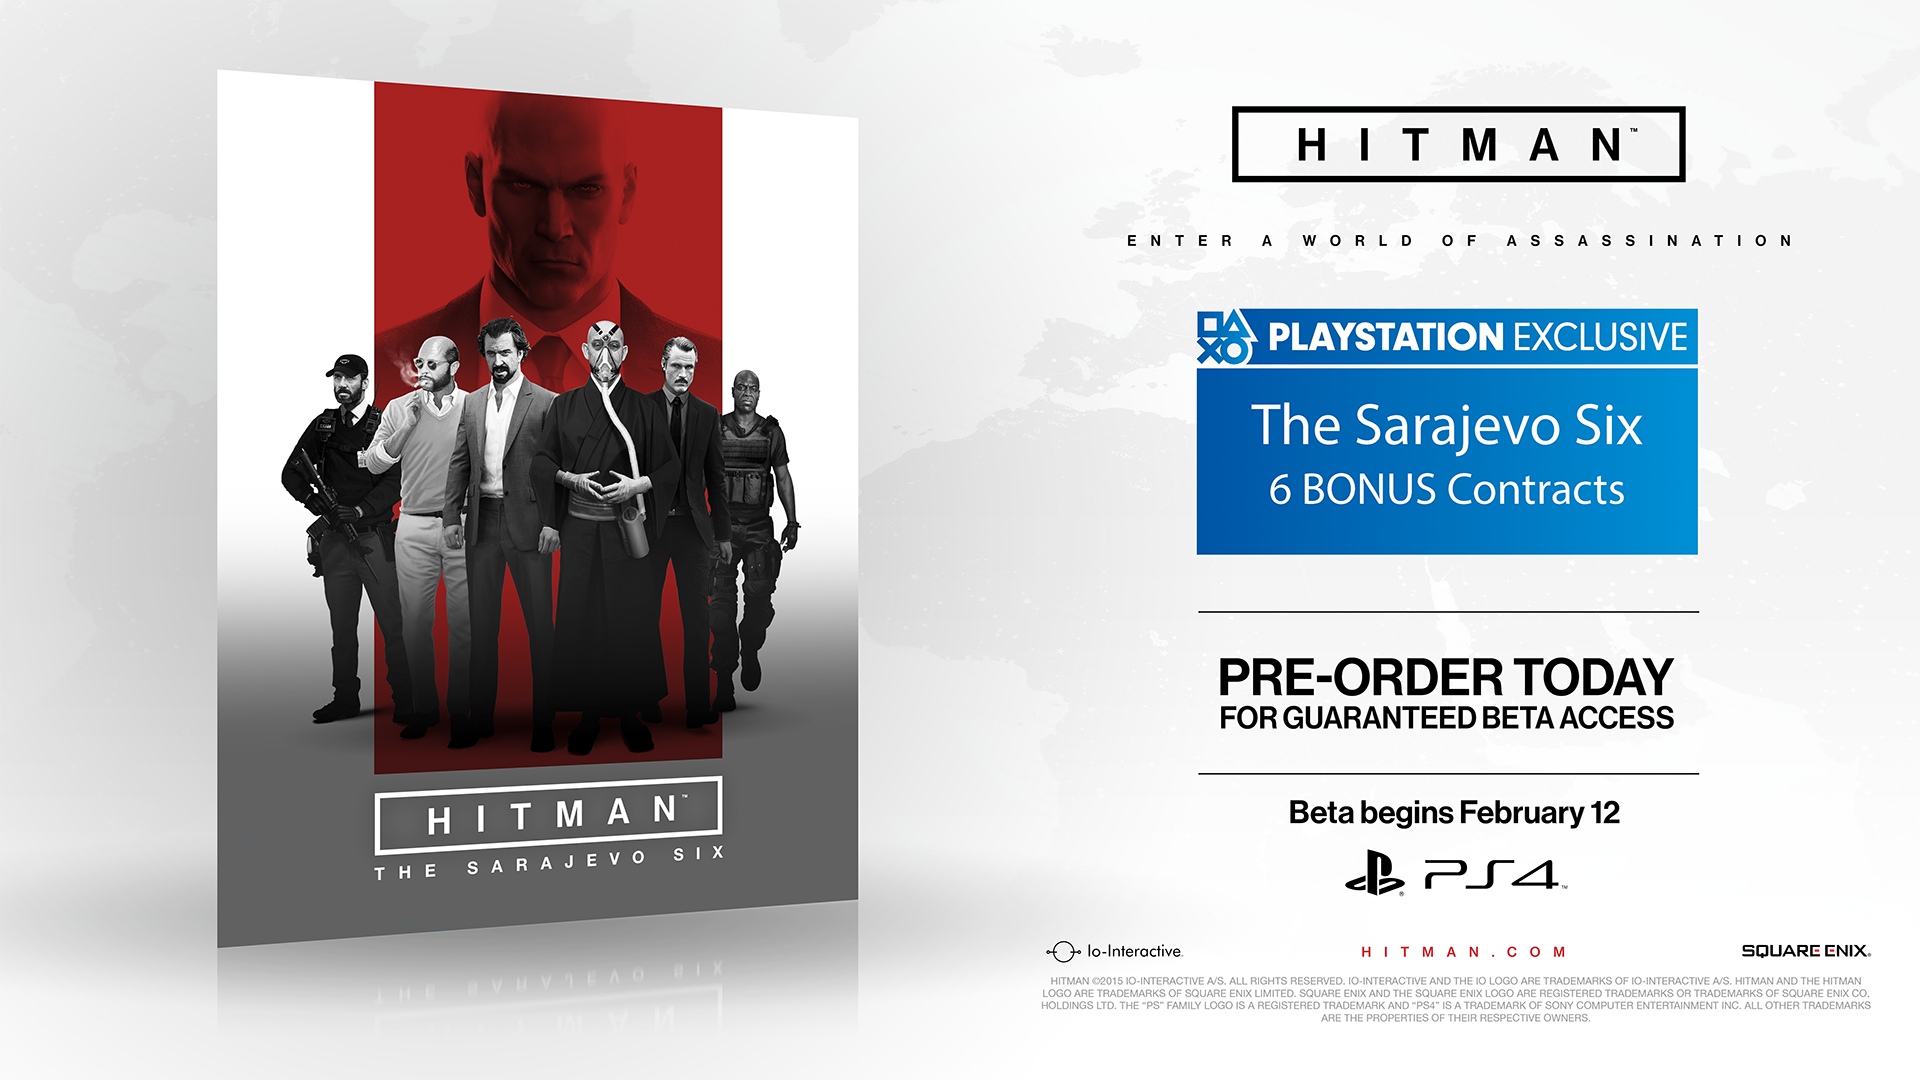 Hitman Playstation Experience